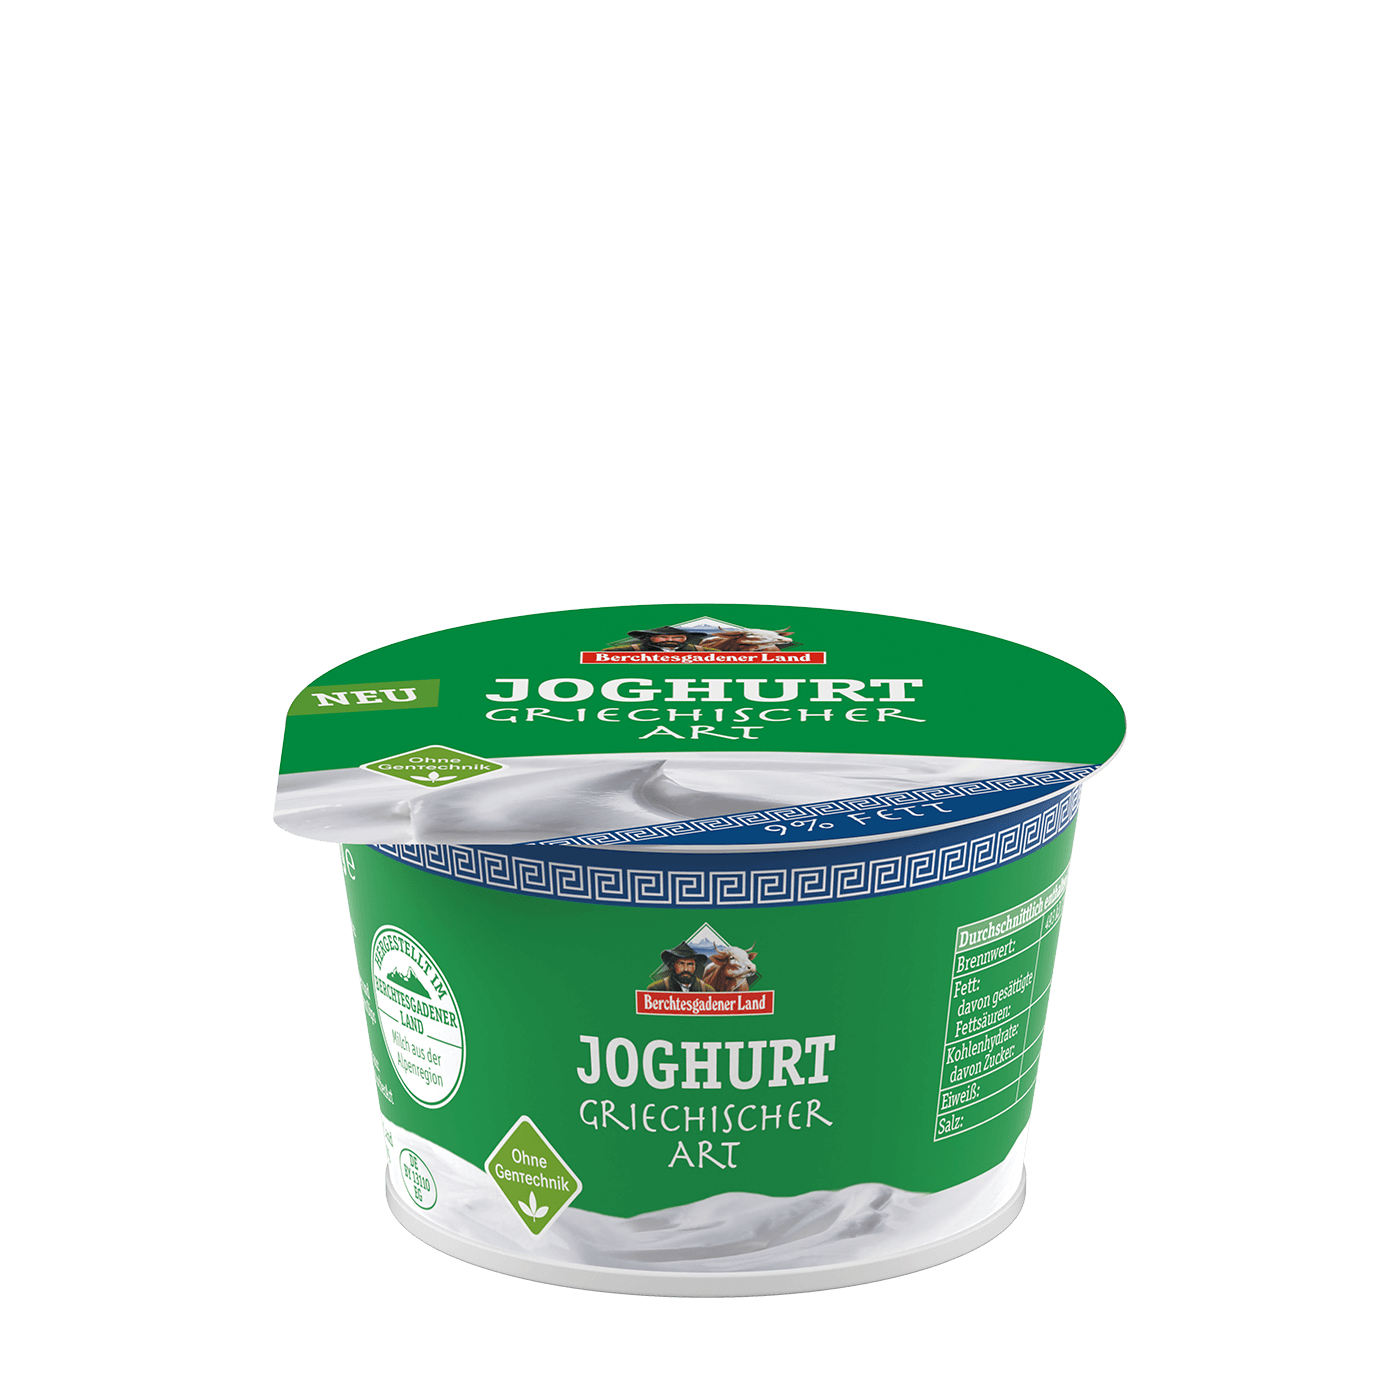 Yogurt Greco cremoso bio 200gr - Bioemozioni